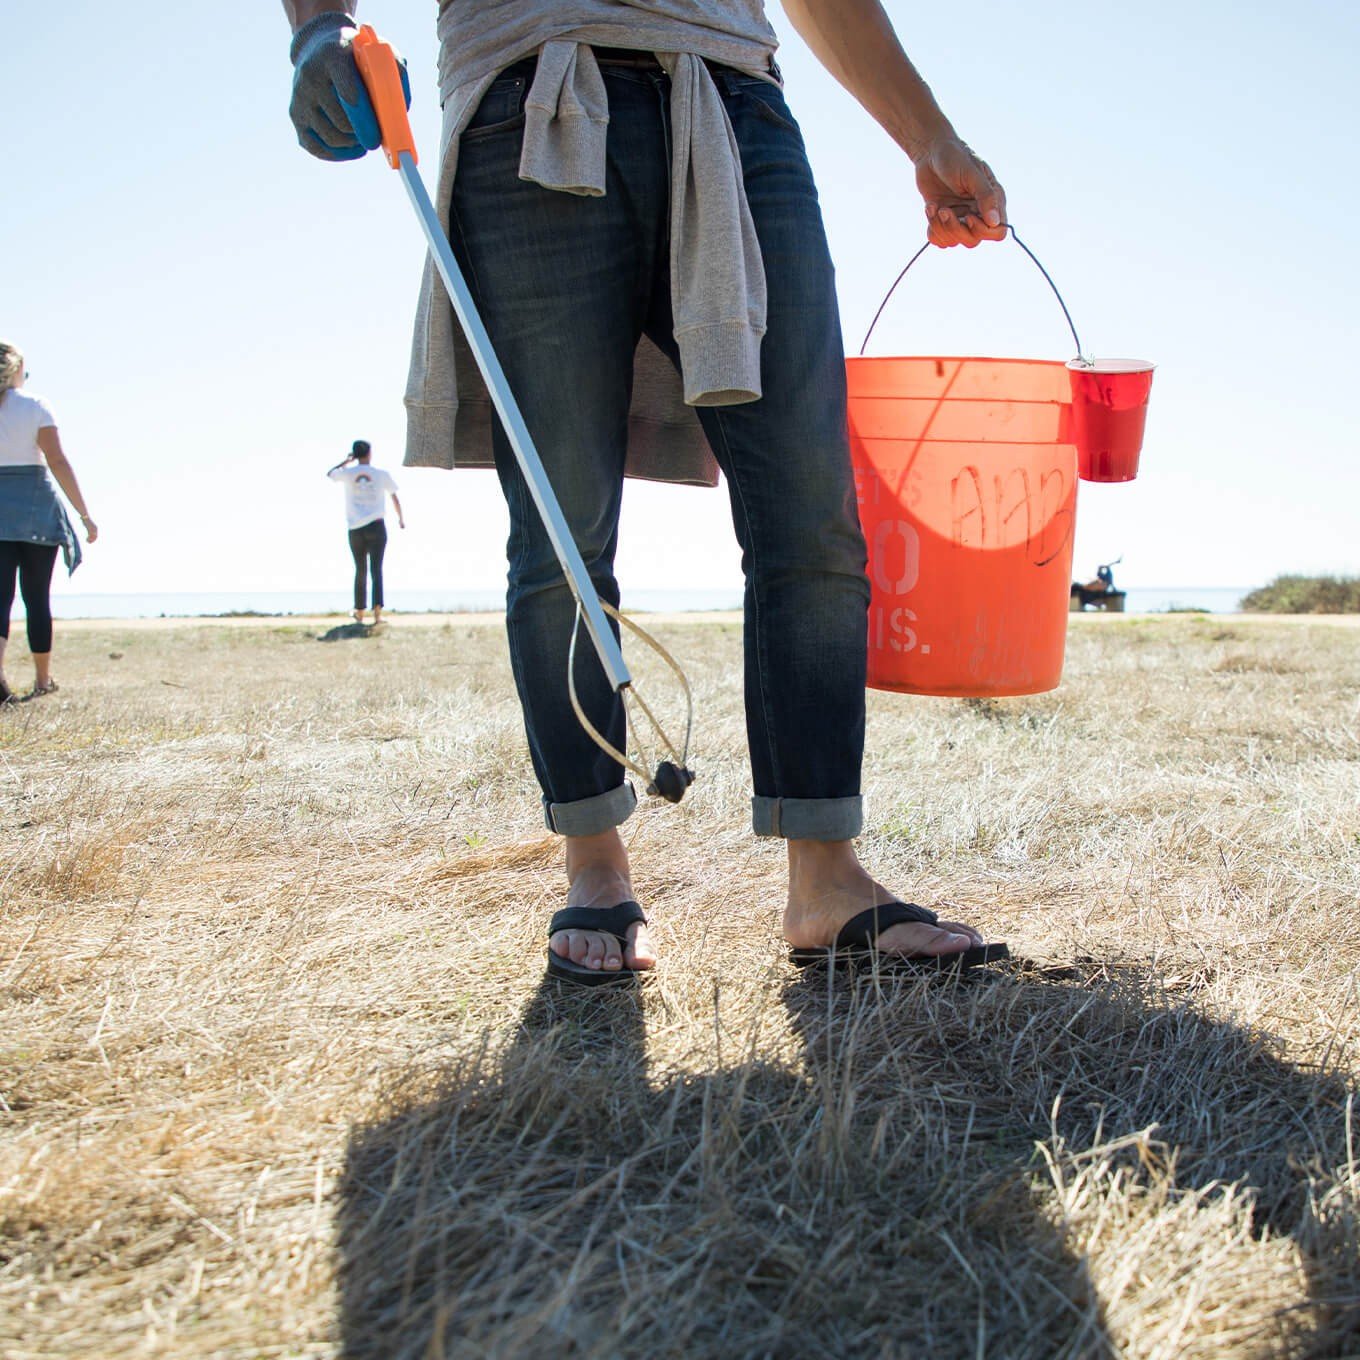 Volunteer picks up trash from beach using grabber and bucket